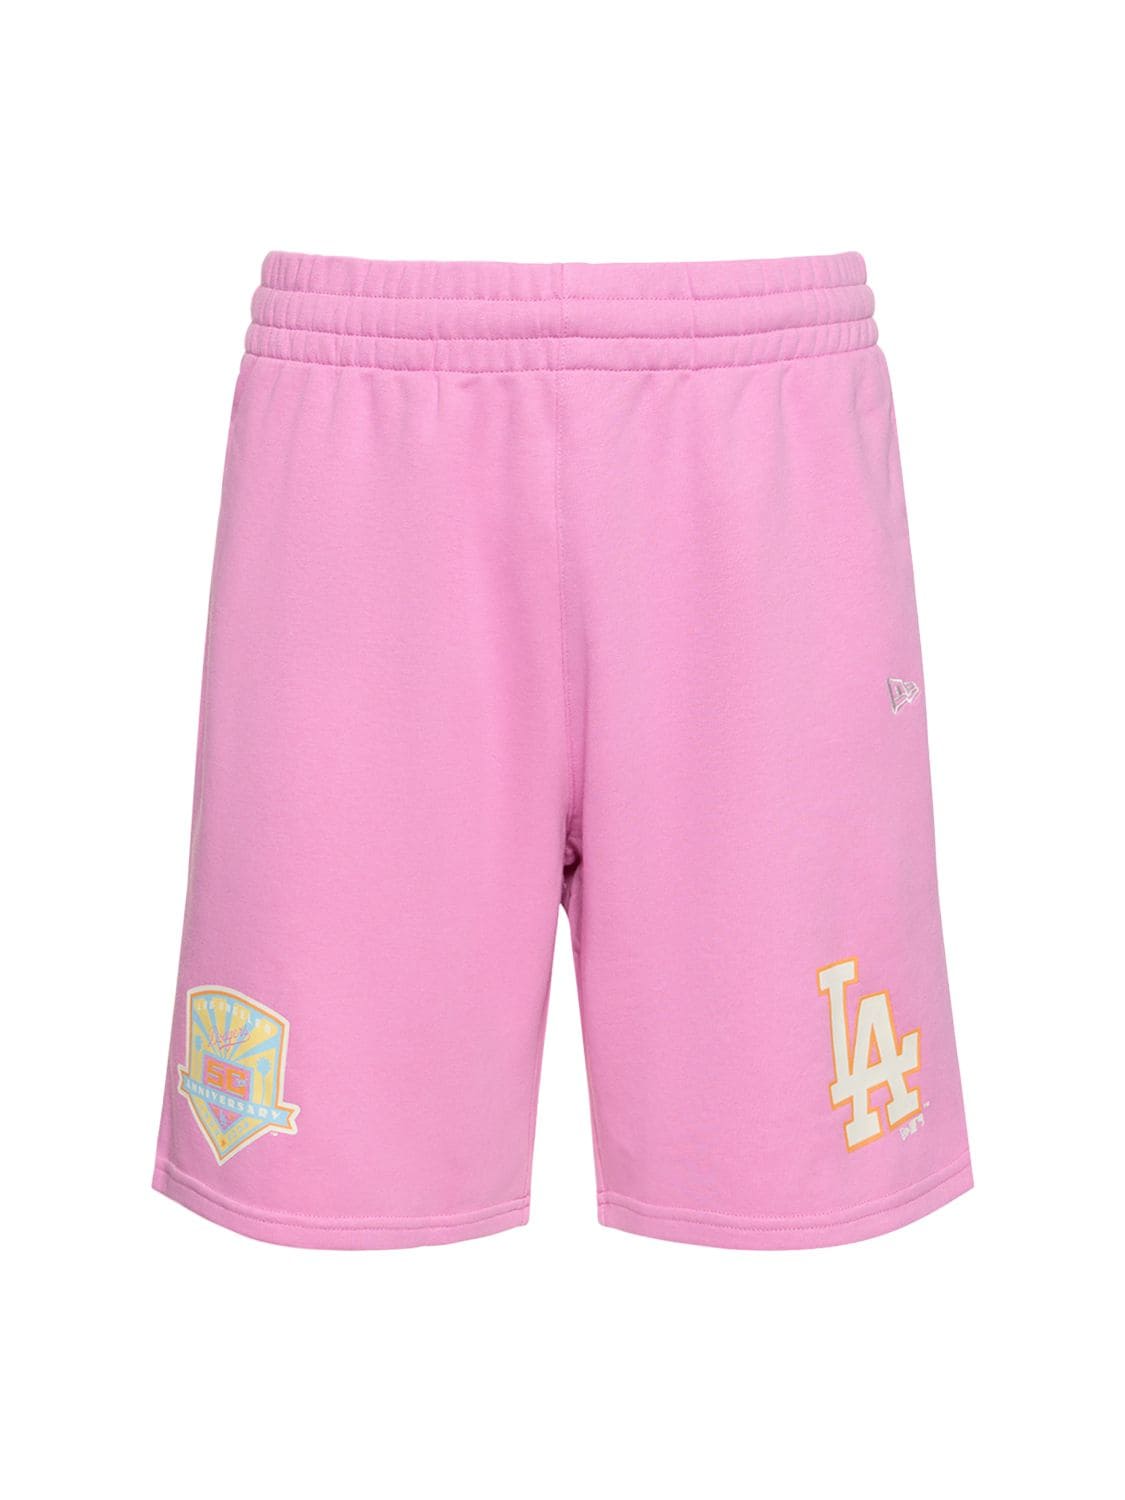 New Era L.a. Dodgers Cotton Blend Short In Pink